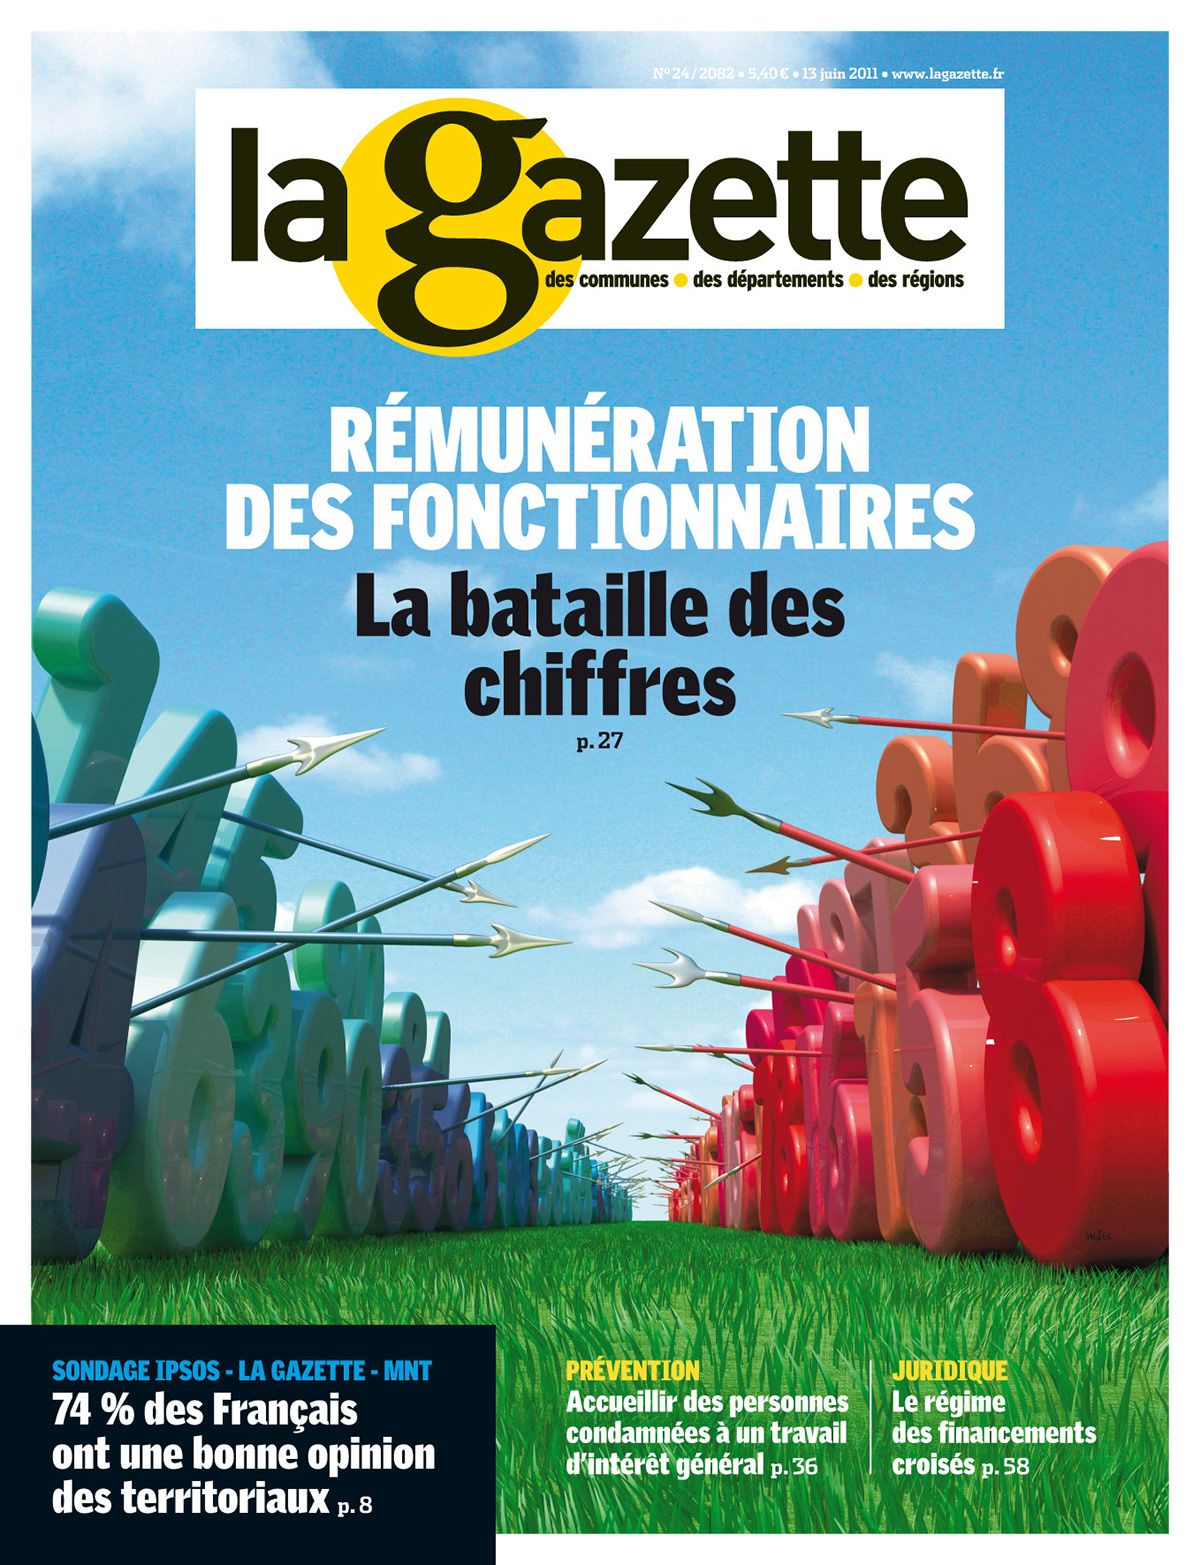 La Gazette des Communes redesign magazine